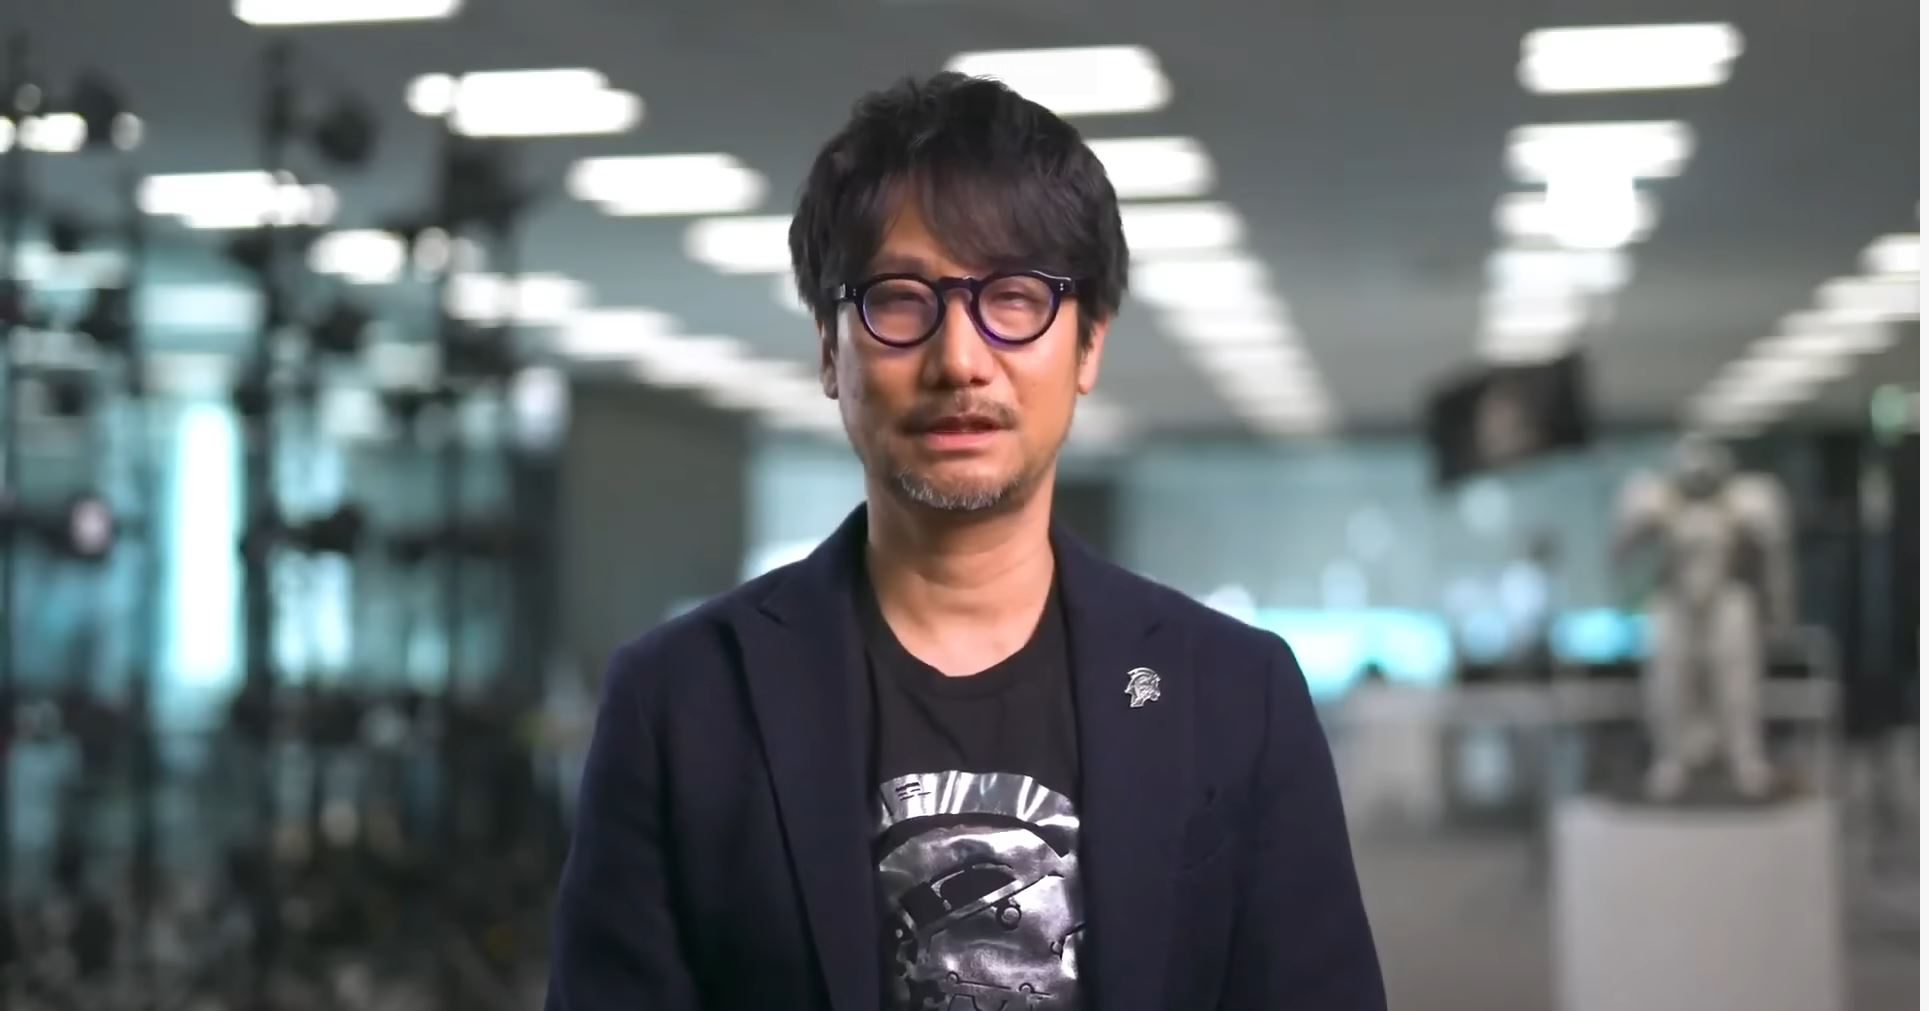 Death Stranding 2 isn't a 'regular' sequel, says Hideo Kojima